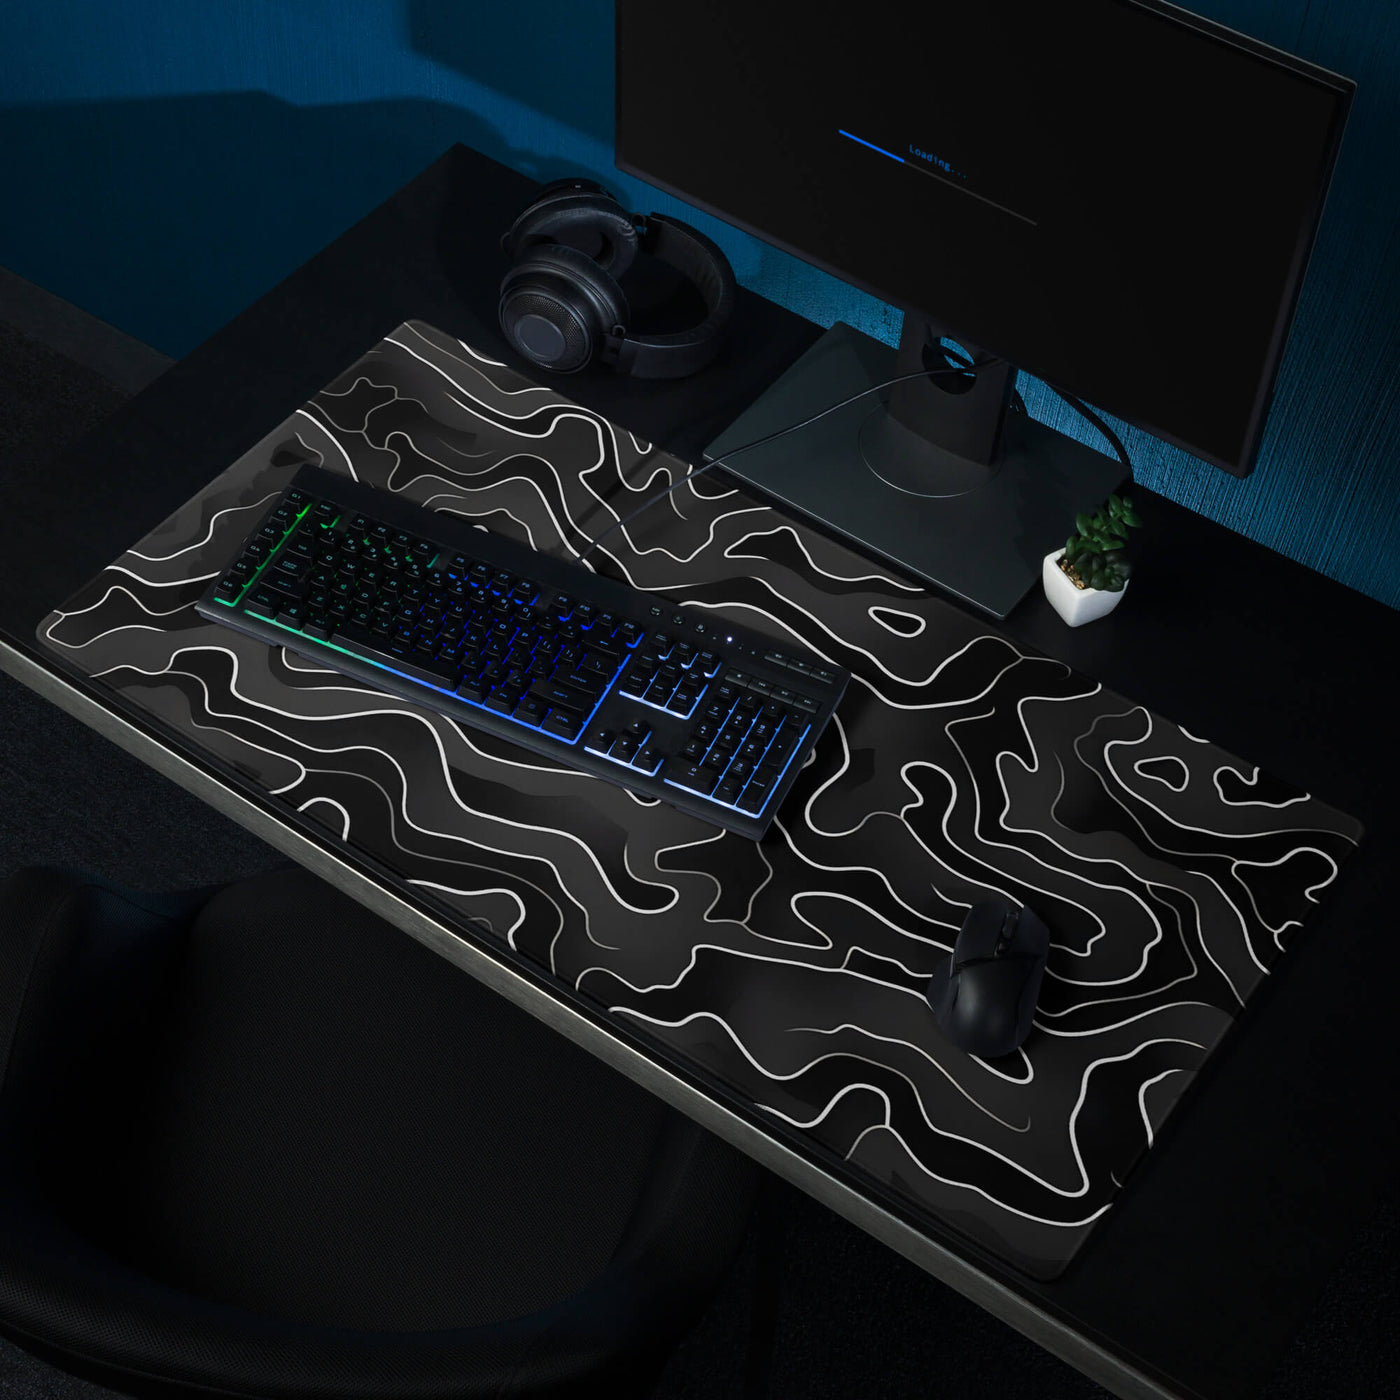 Premium Gaming Mouse Pad | Black'n White Swirl Line Art 3